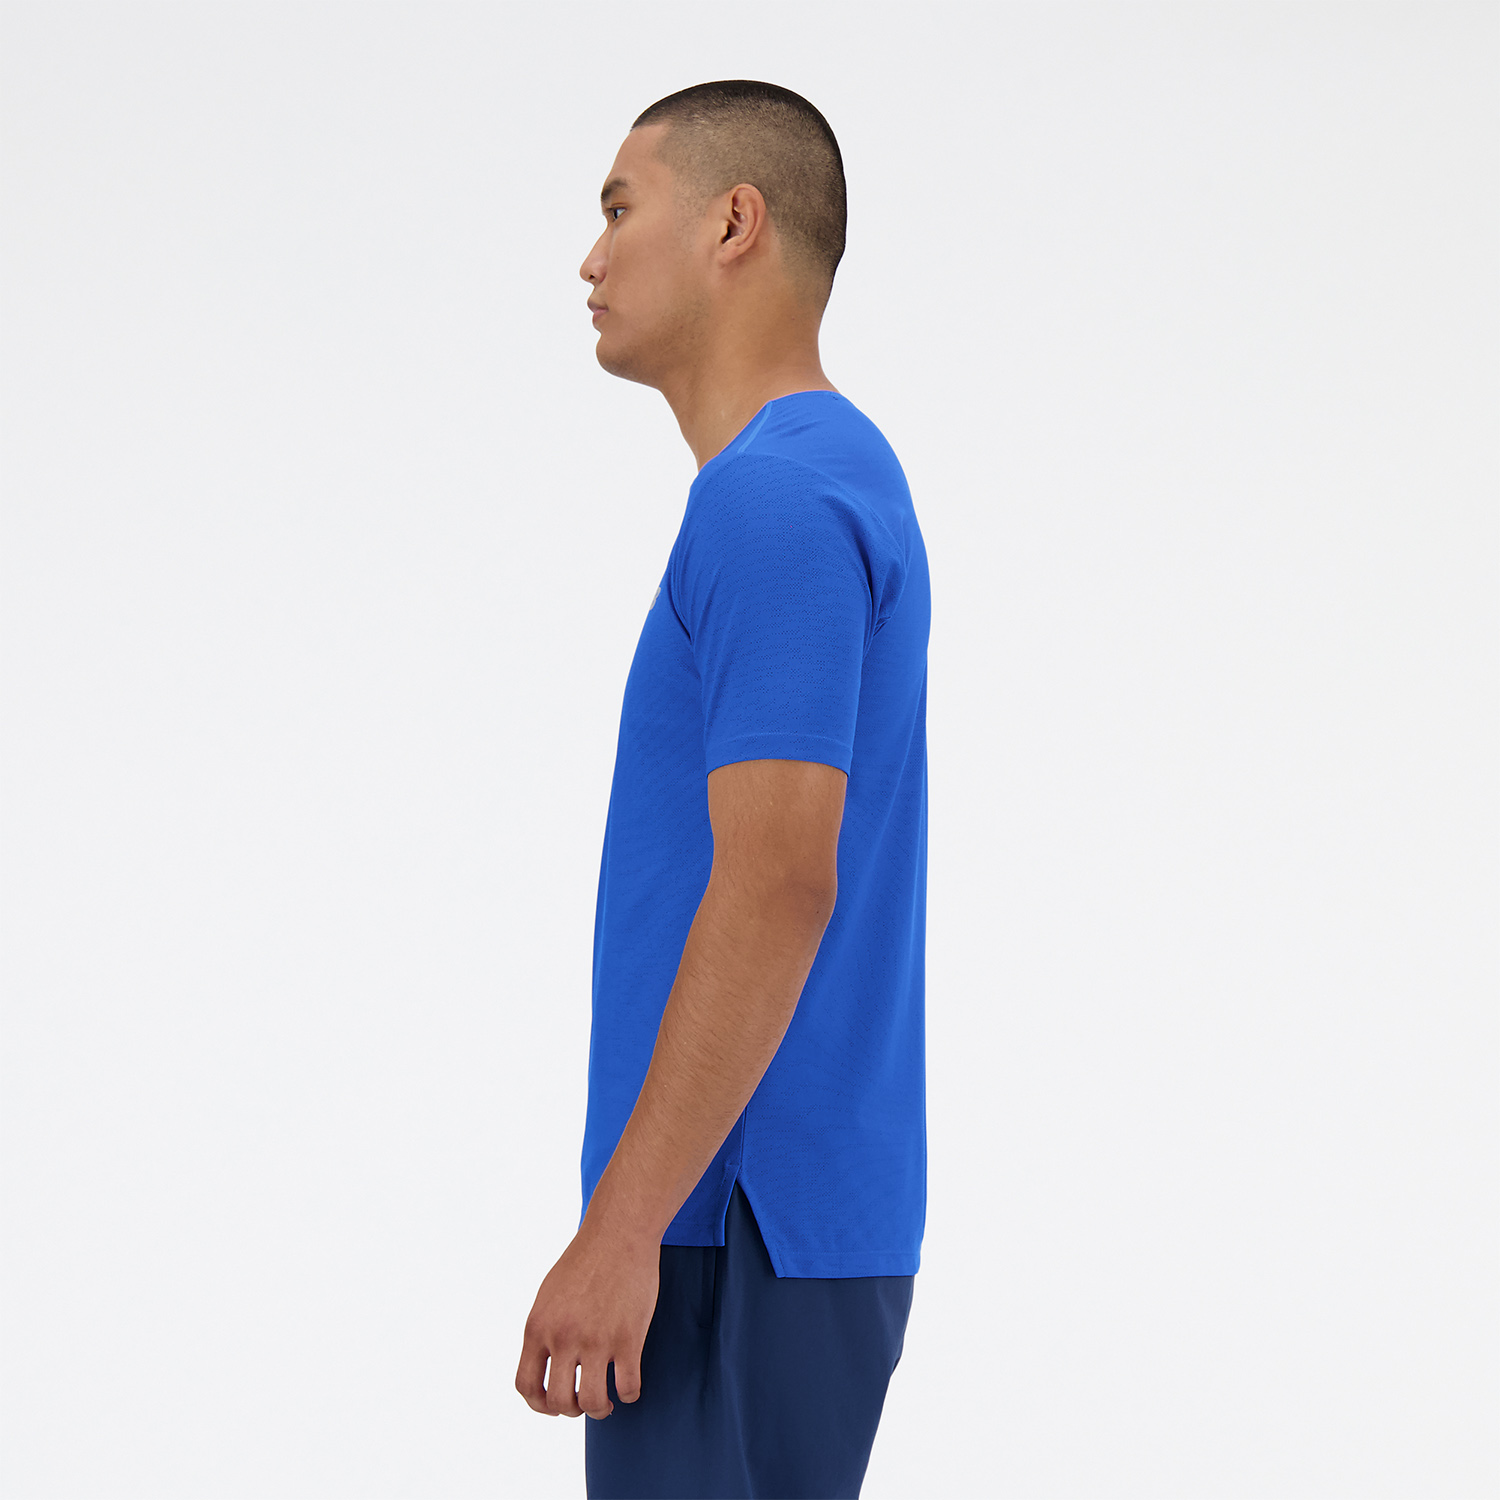 New Balance Athletics T-Shirt - Blue Oasis